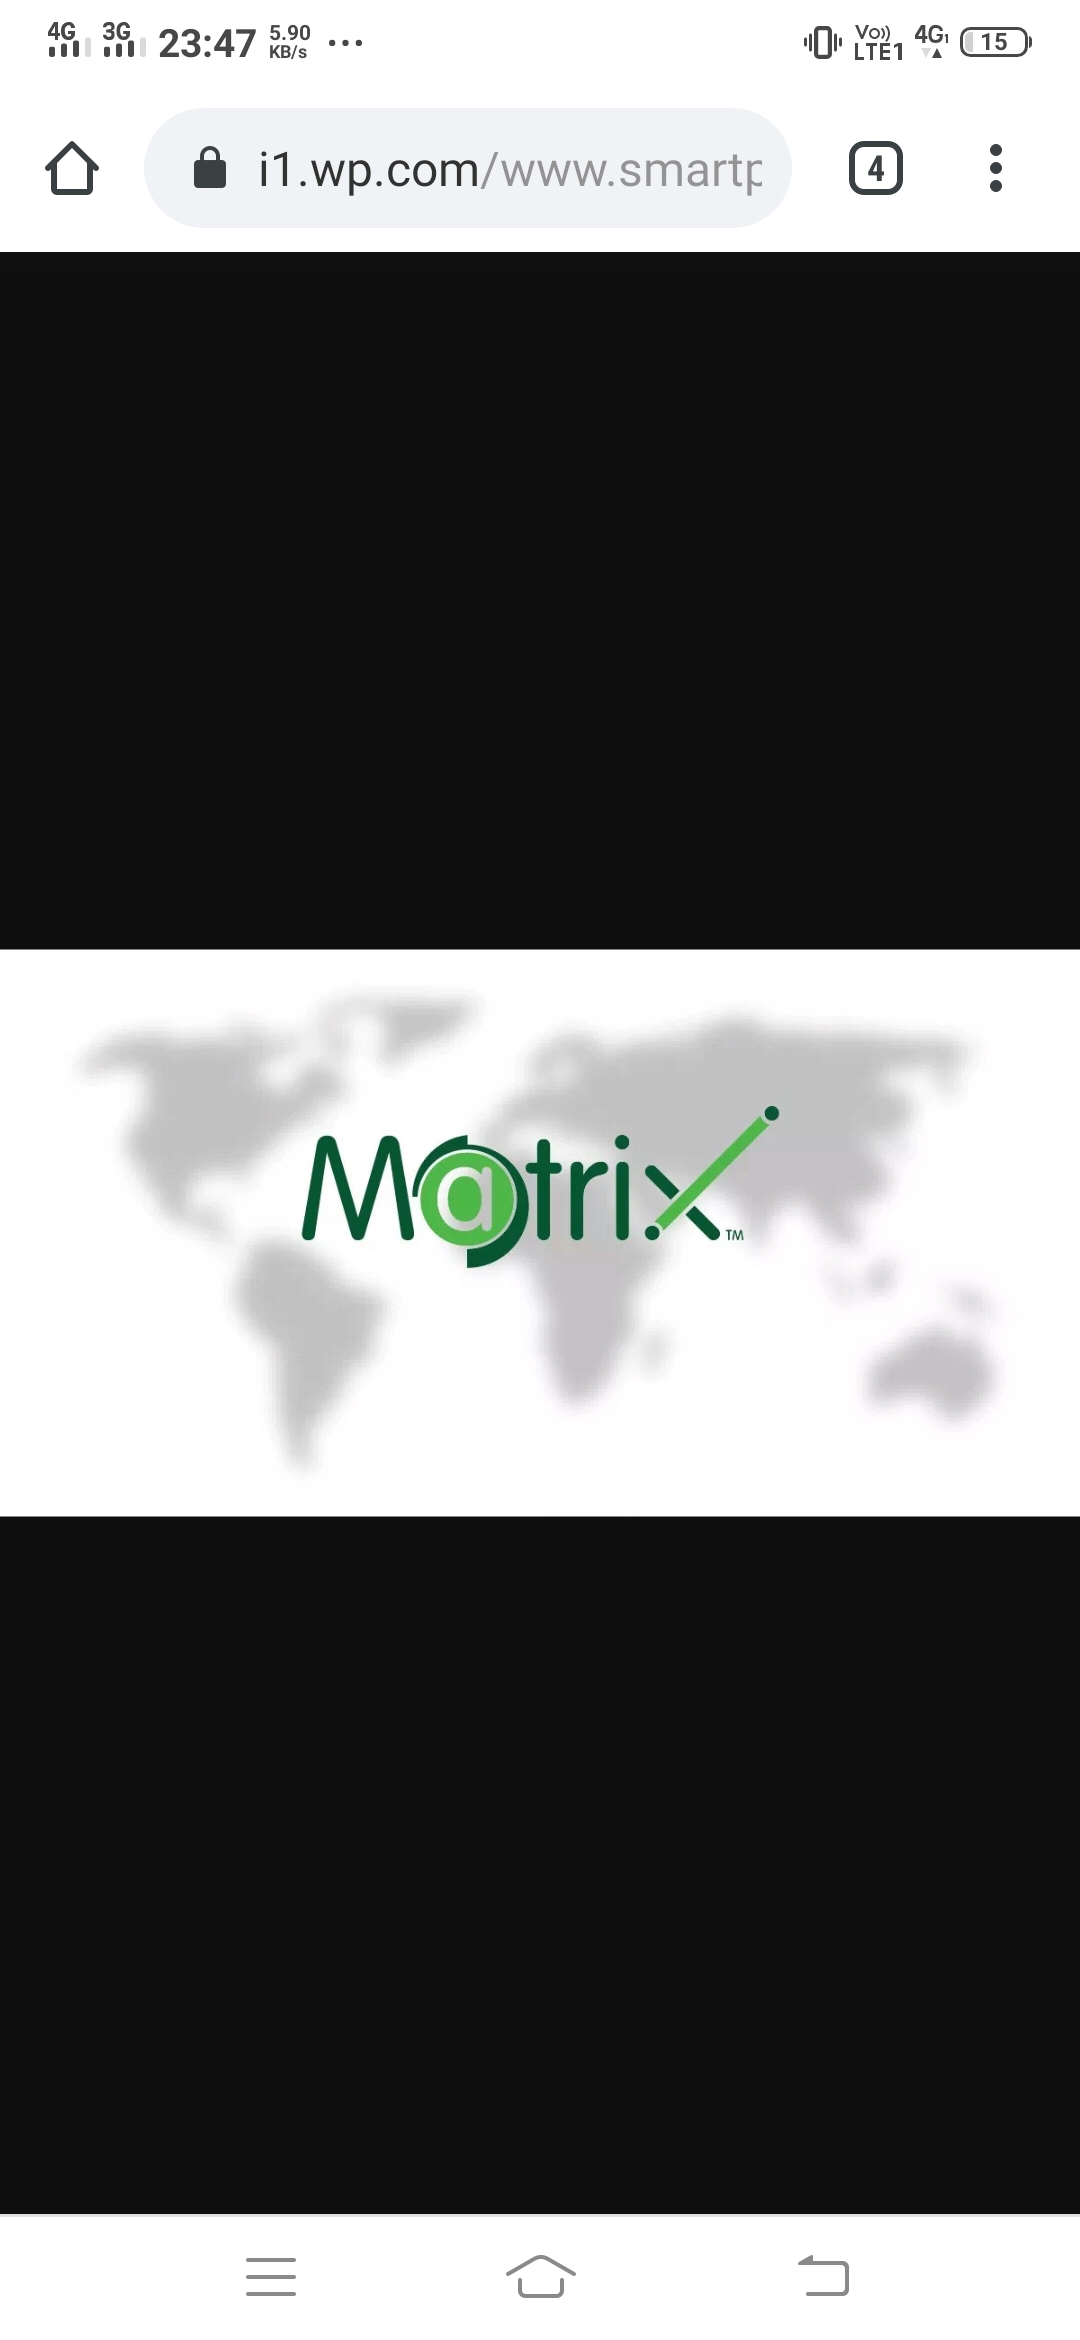 Matrix Cellular International Services Ltd